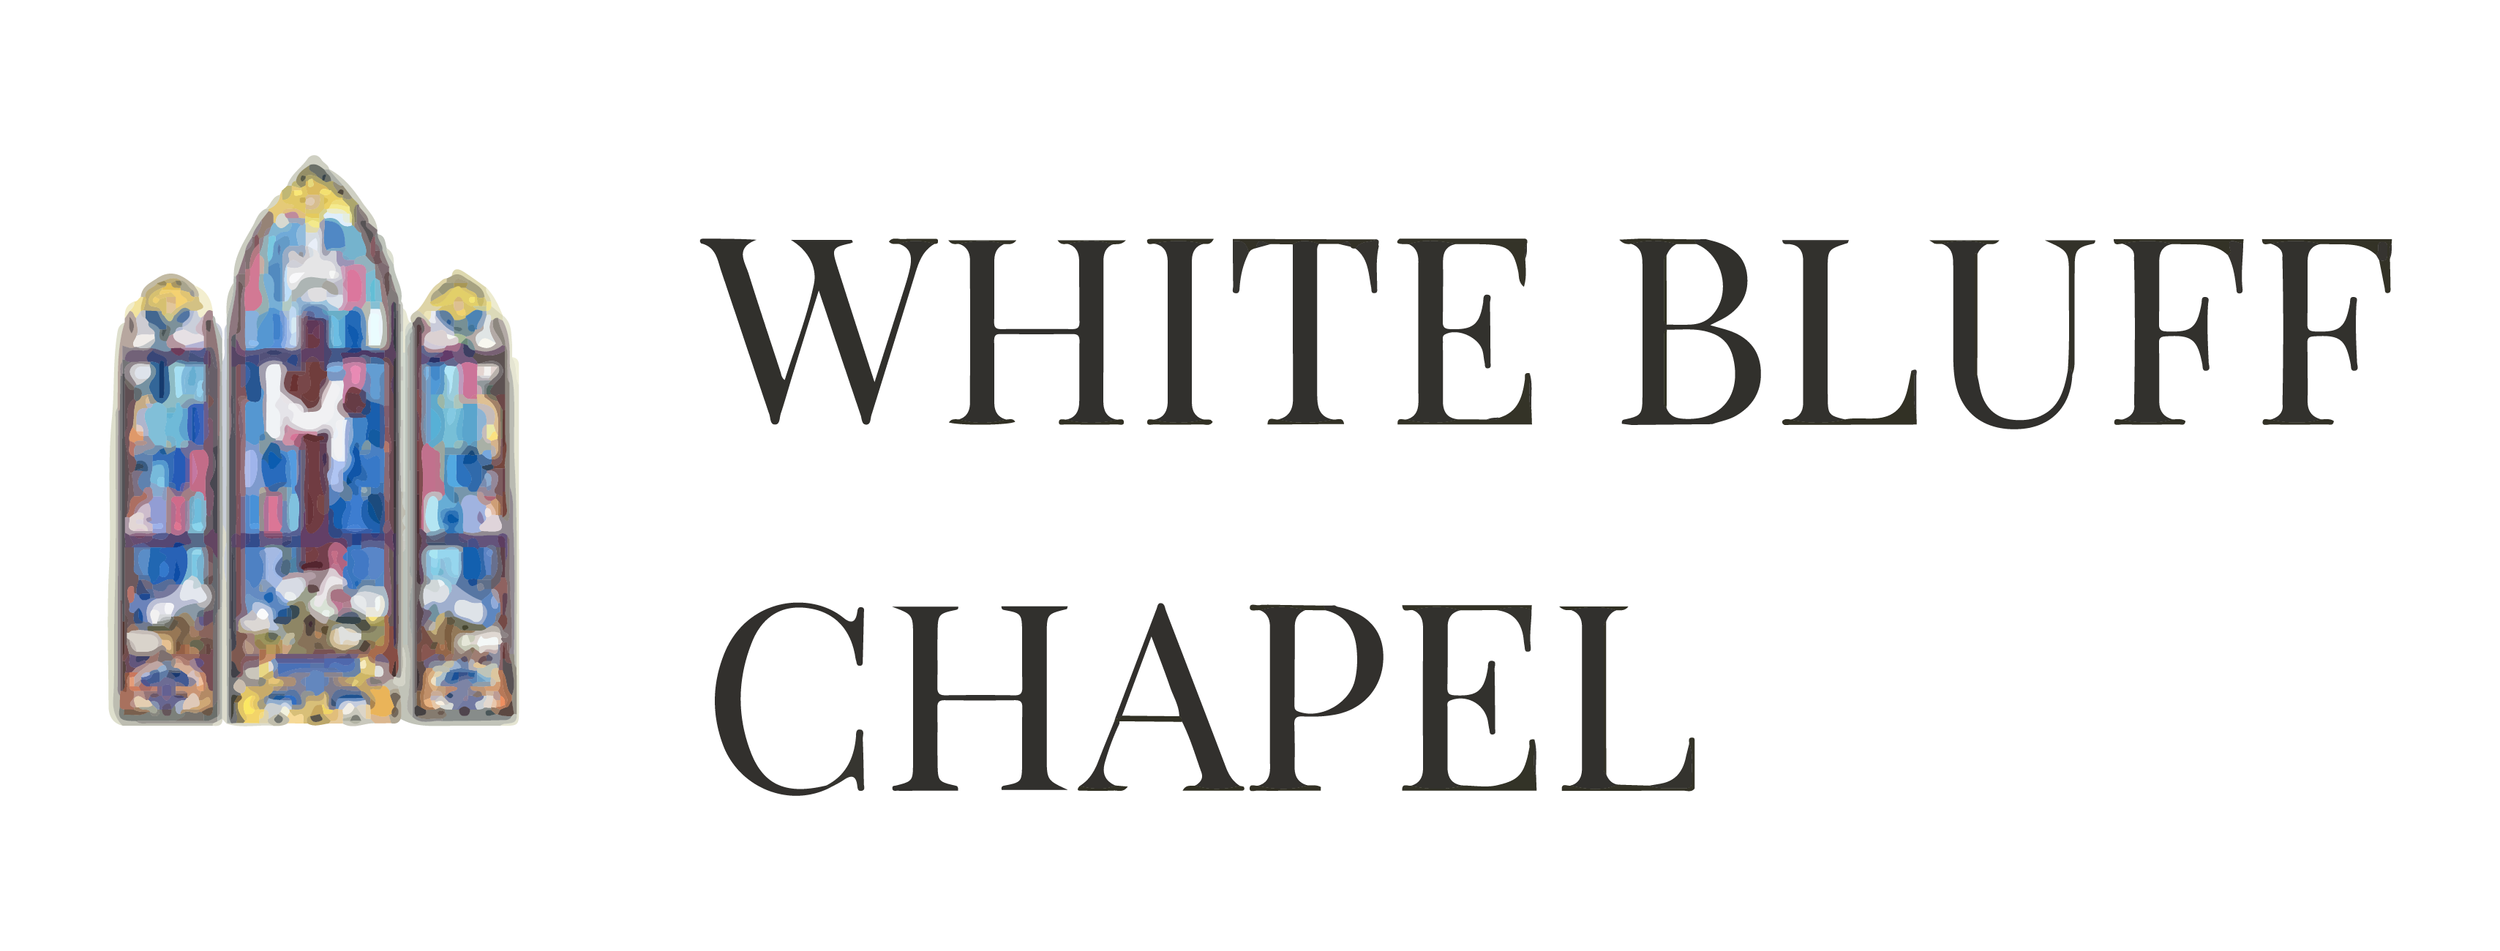 White Bluff Chapel-02.png